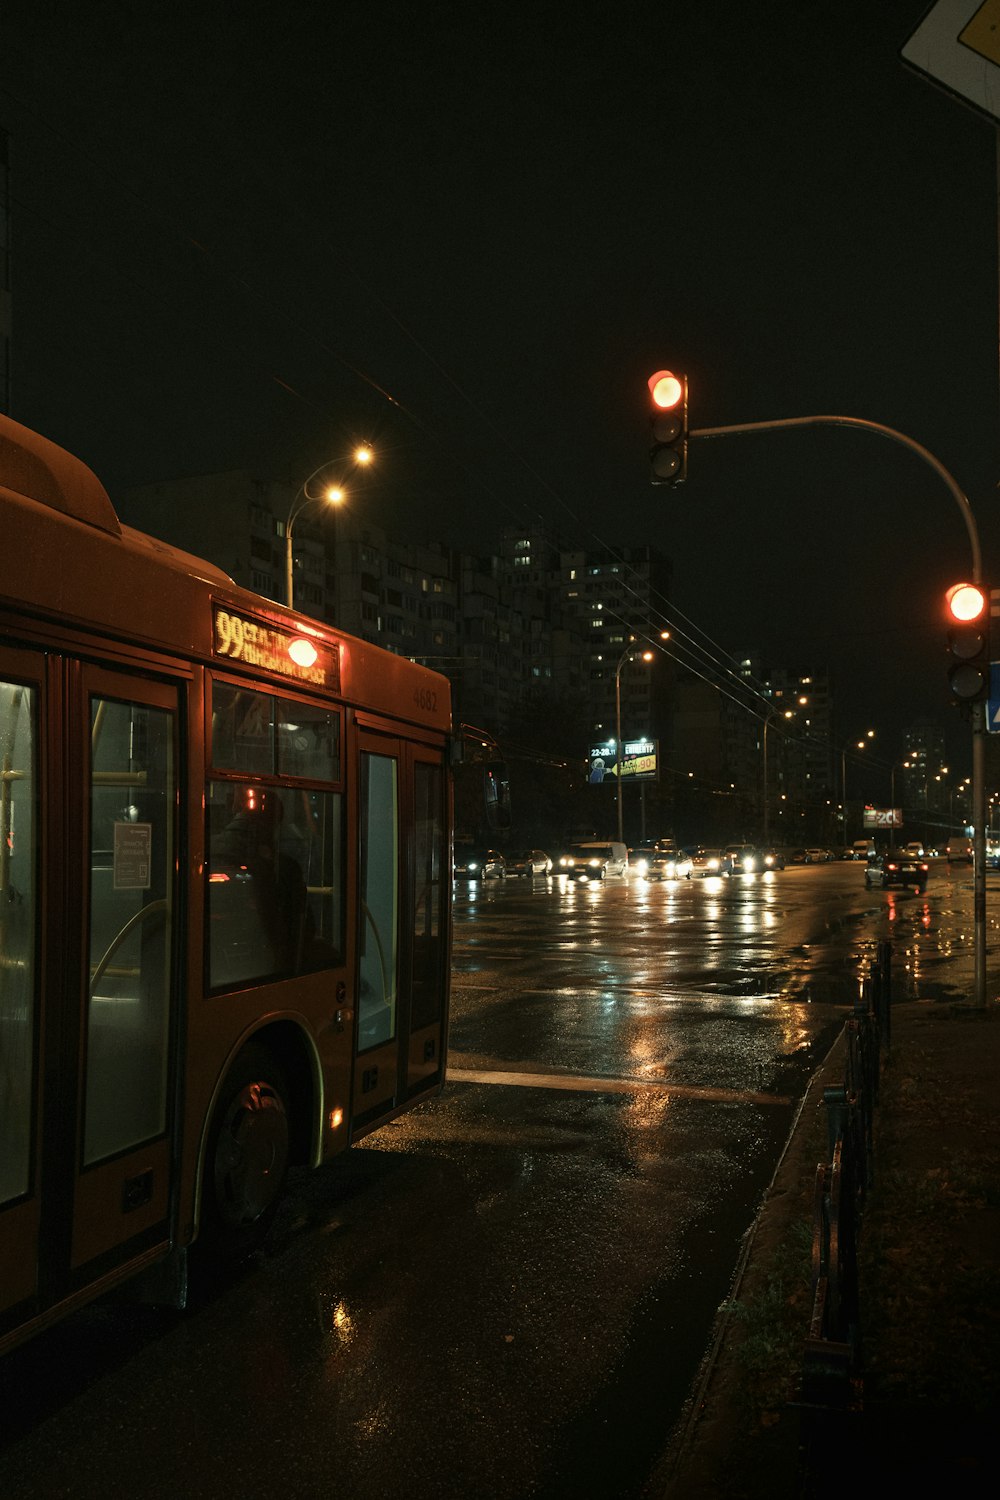 a city bus stopped at a bus stop at night